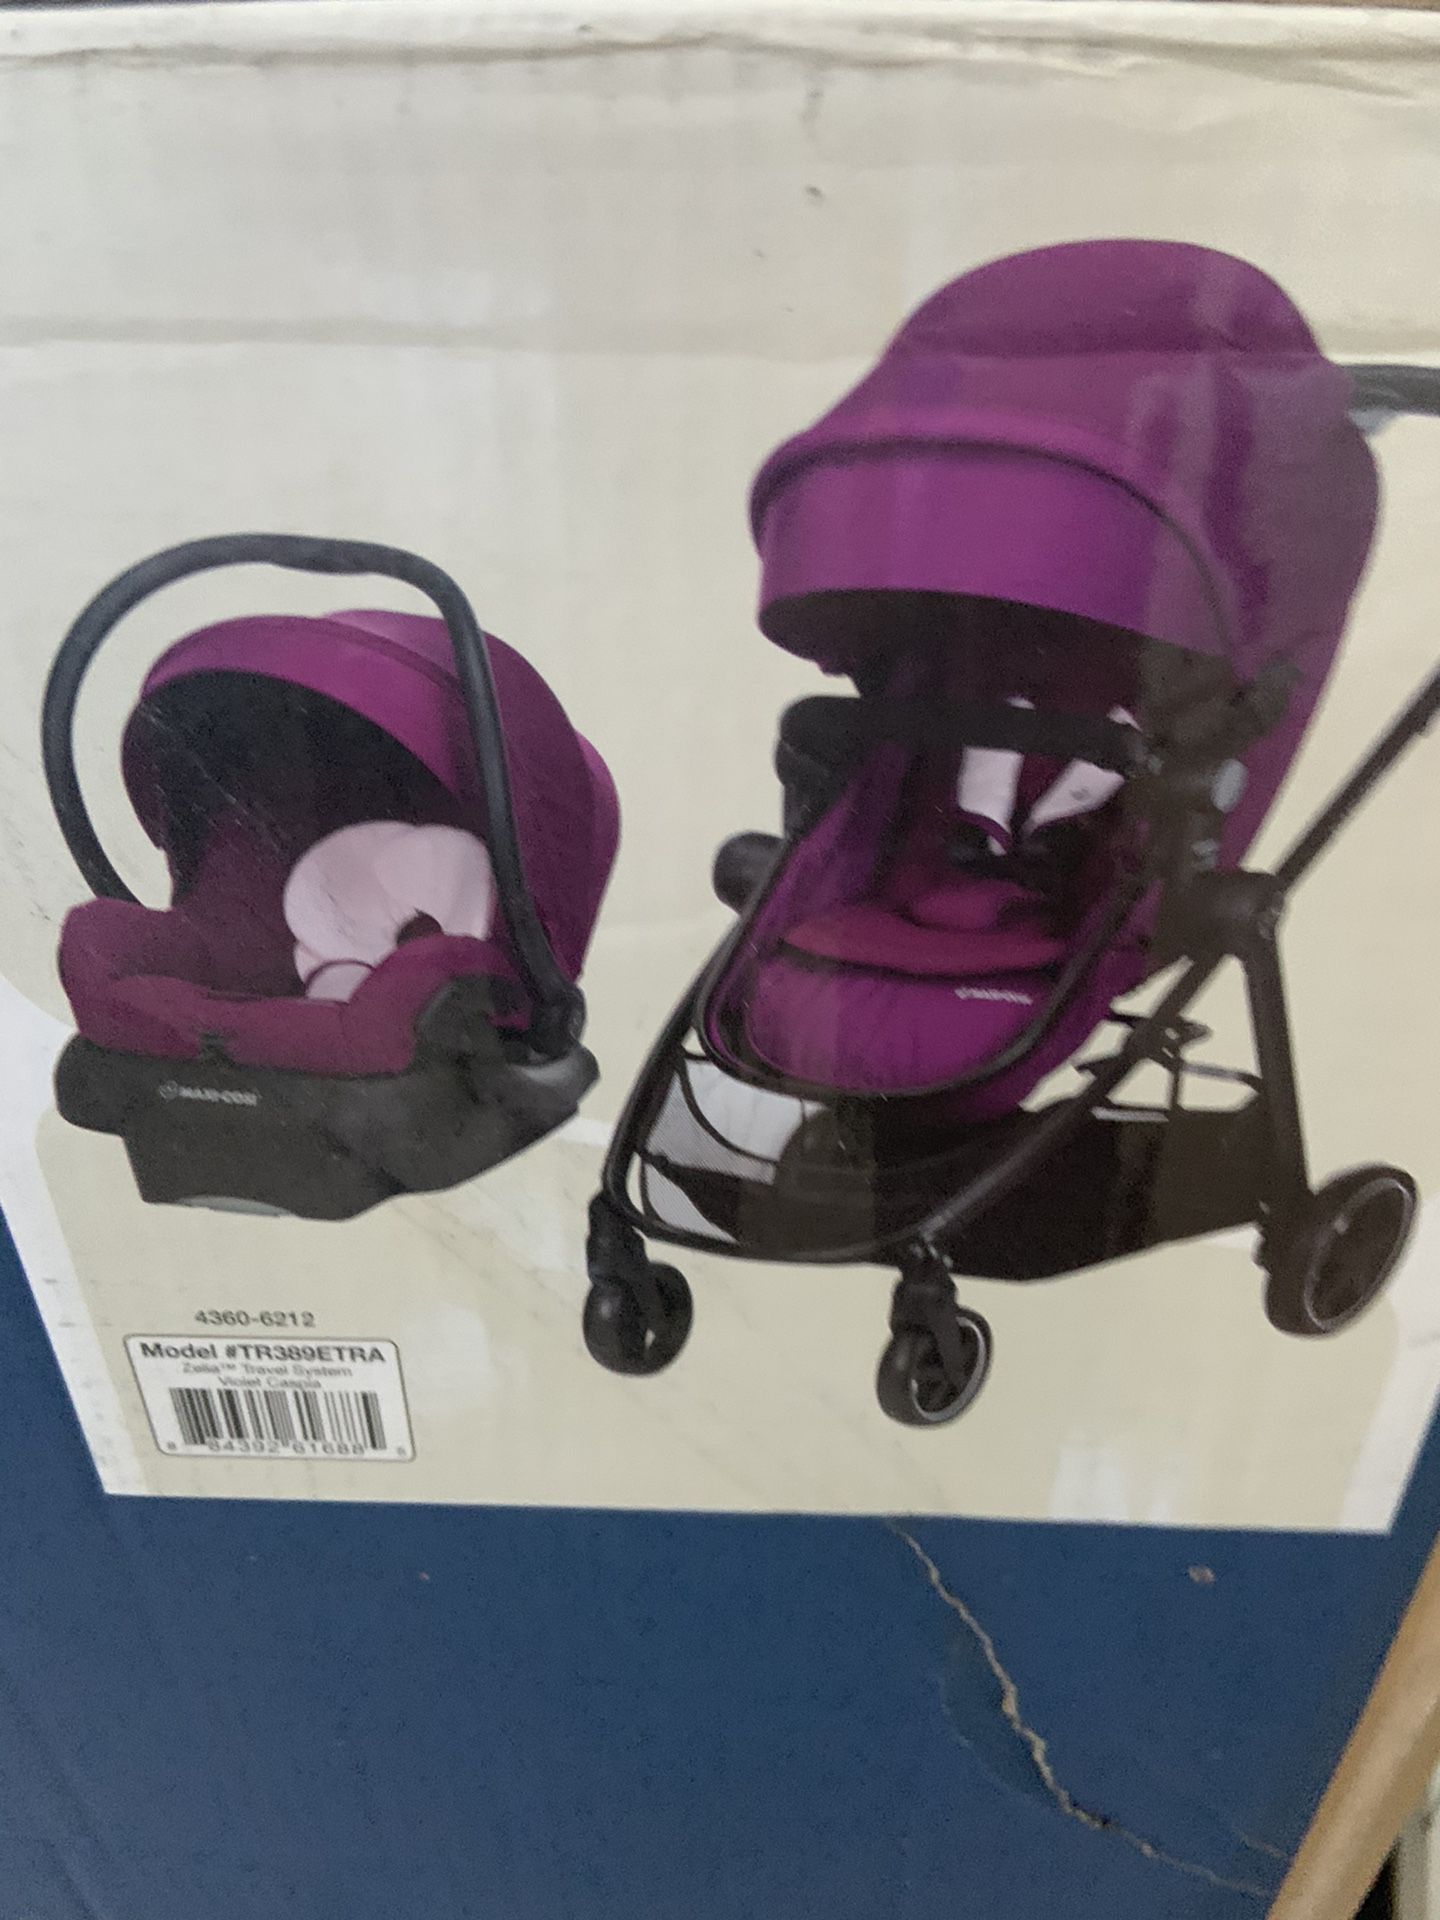 Maxi Cosi zelia travel system stroller violet purple brand new in box